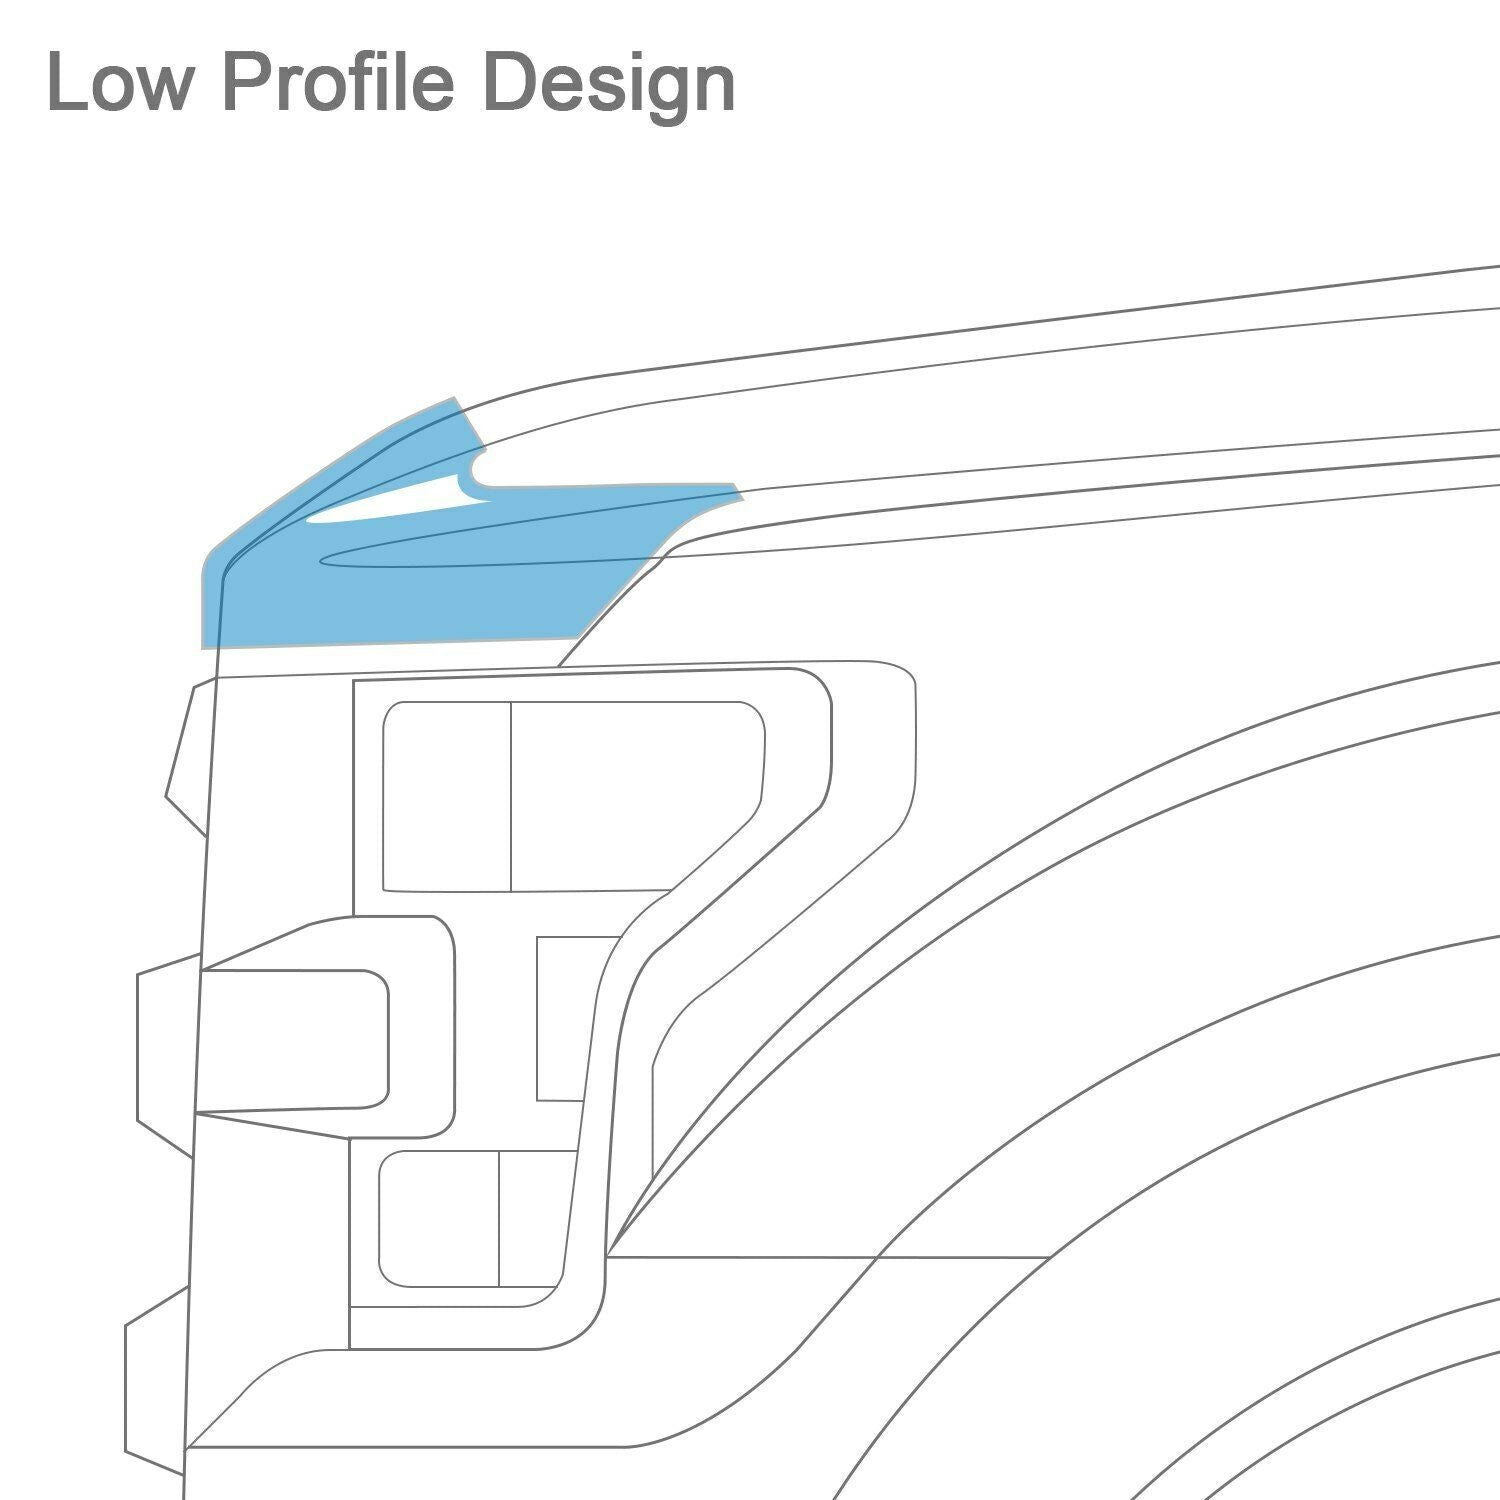 AVS Low Profile Hoodflector Smoke Protector Bug Shield For 2019 Ram 1500 - 21953